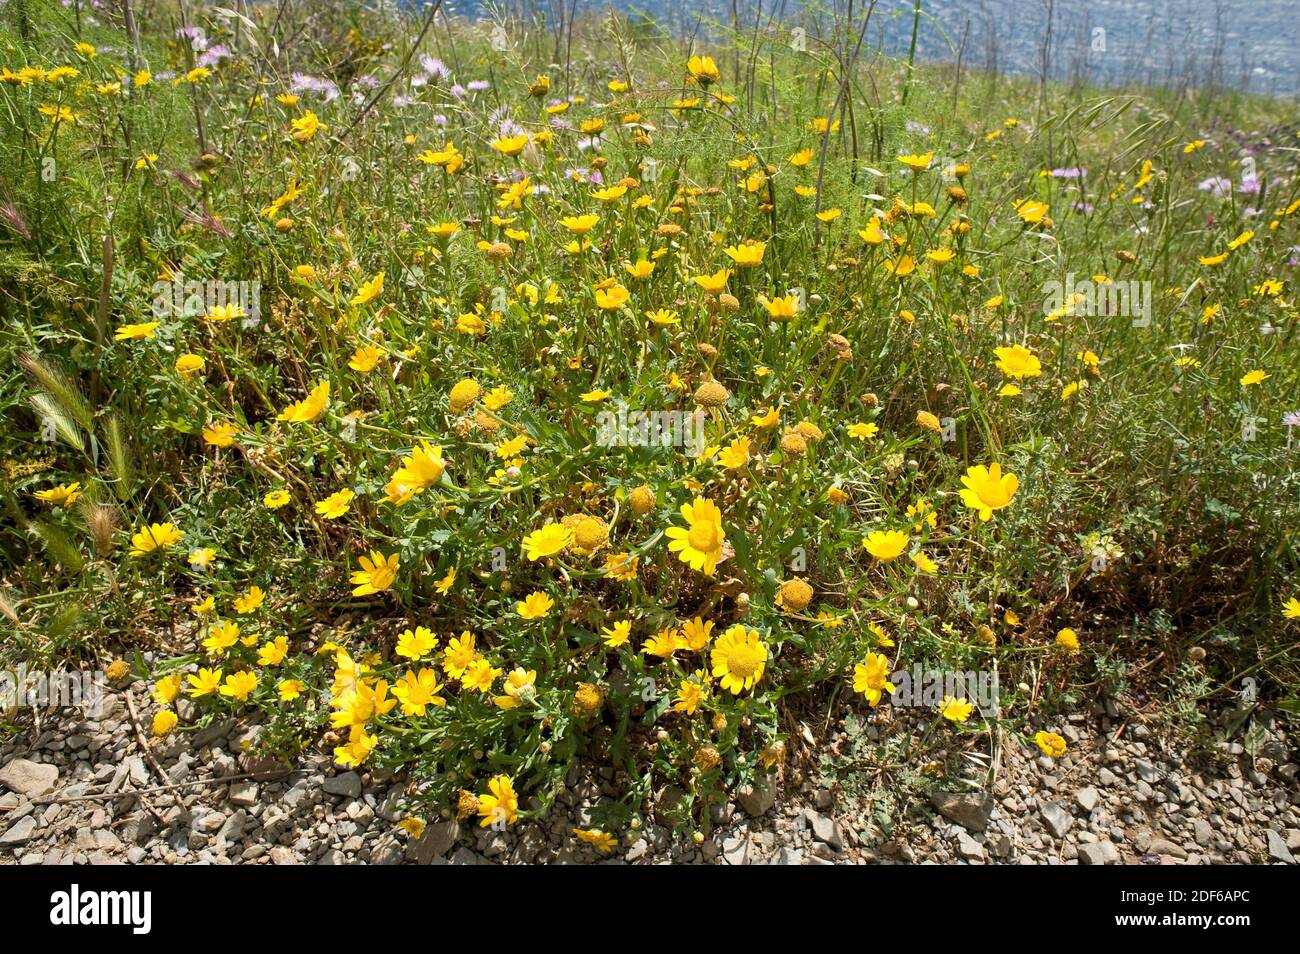 Corn marigold or corn daisy (Chrysanthemum segetum or Glebionis segetum) is a perennial herb native to Mediterranean region. Angiosperms. Asteraceae. Stock Photo